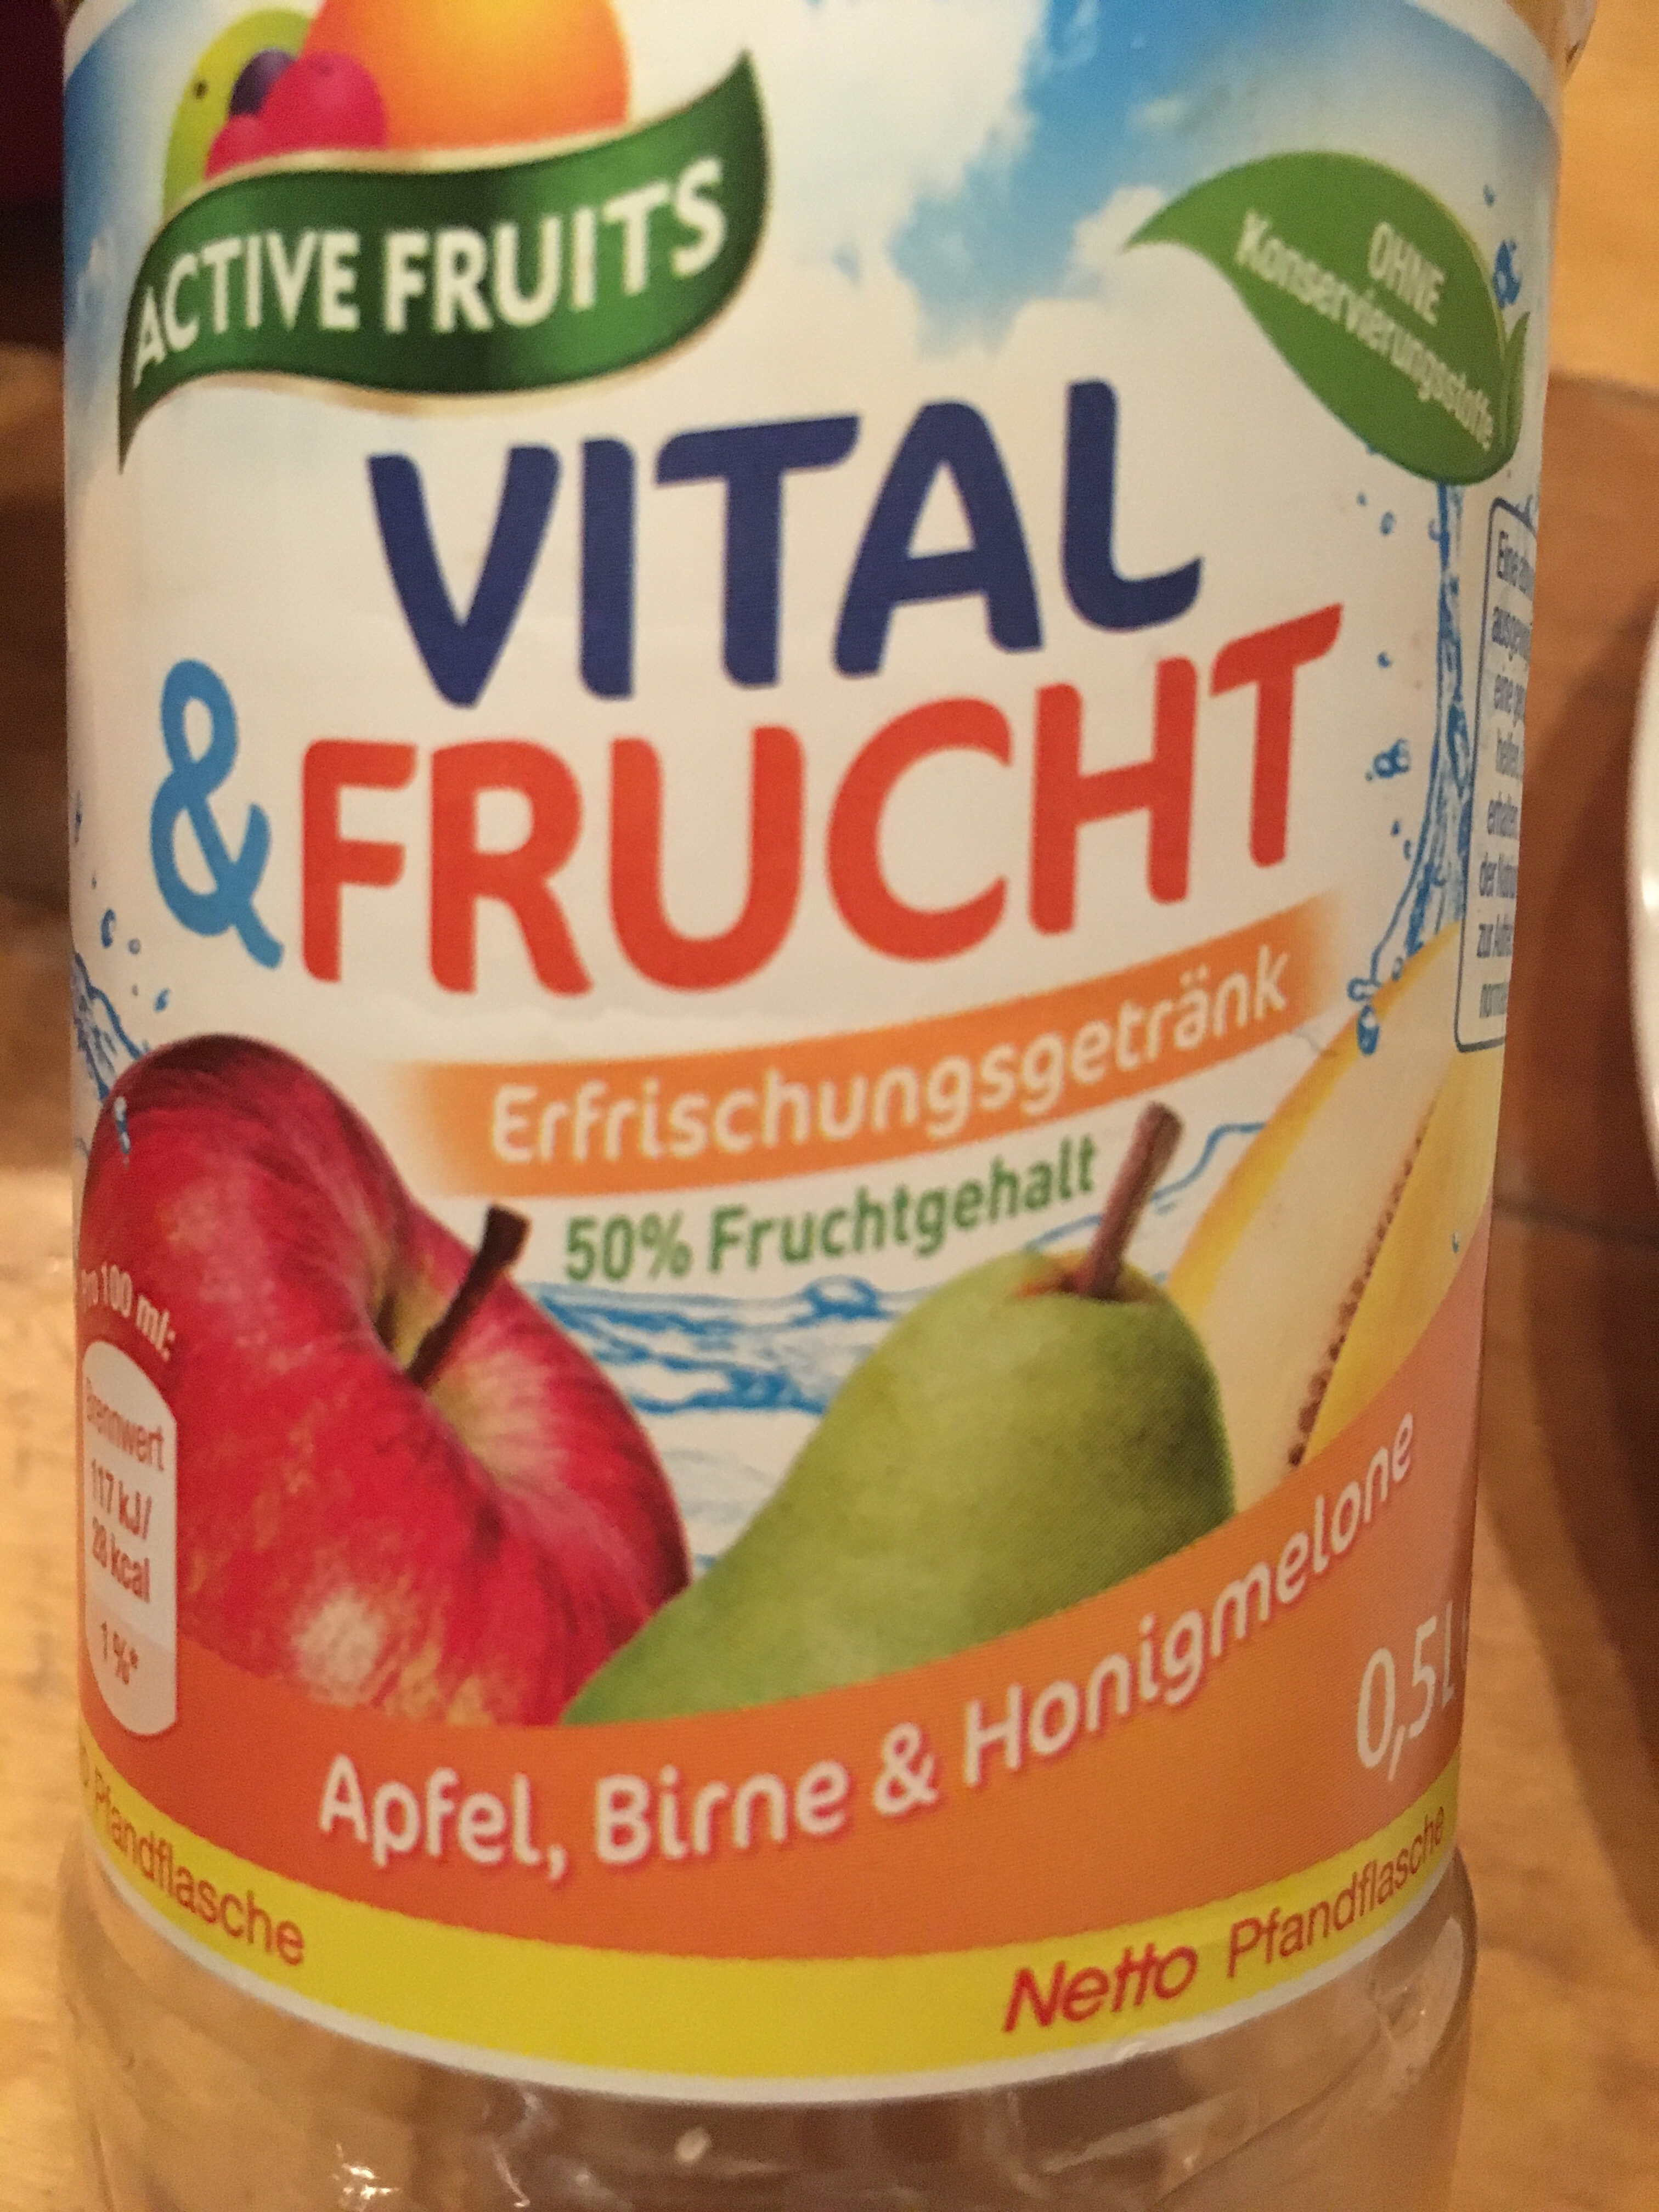 Vital & Frucht Apfel, Birne & Honigmelone - Product - de